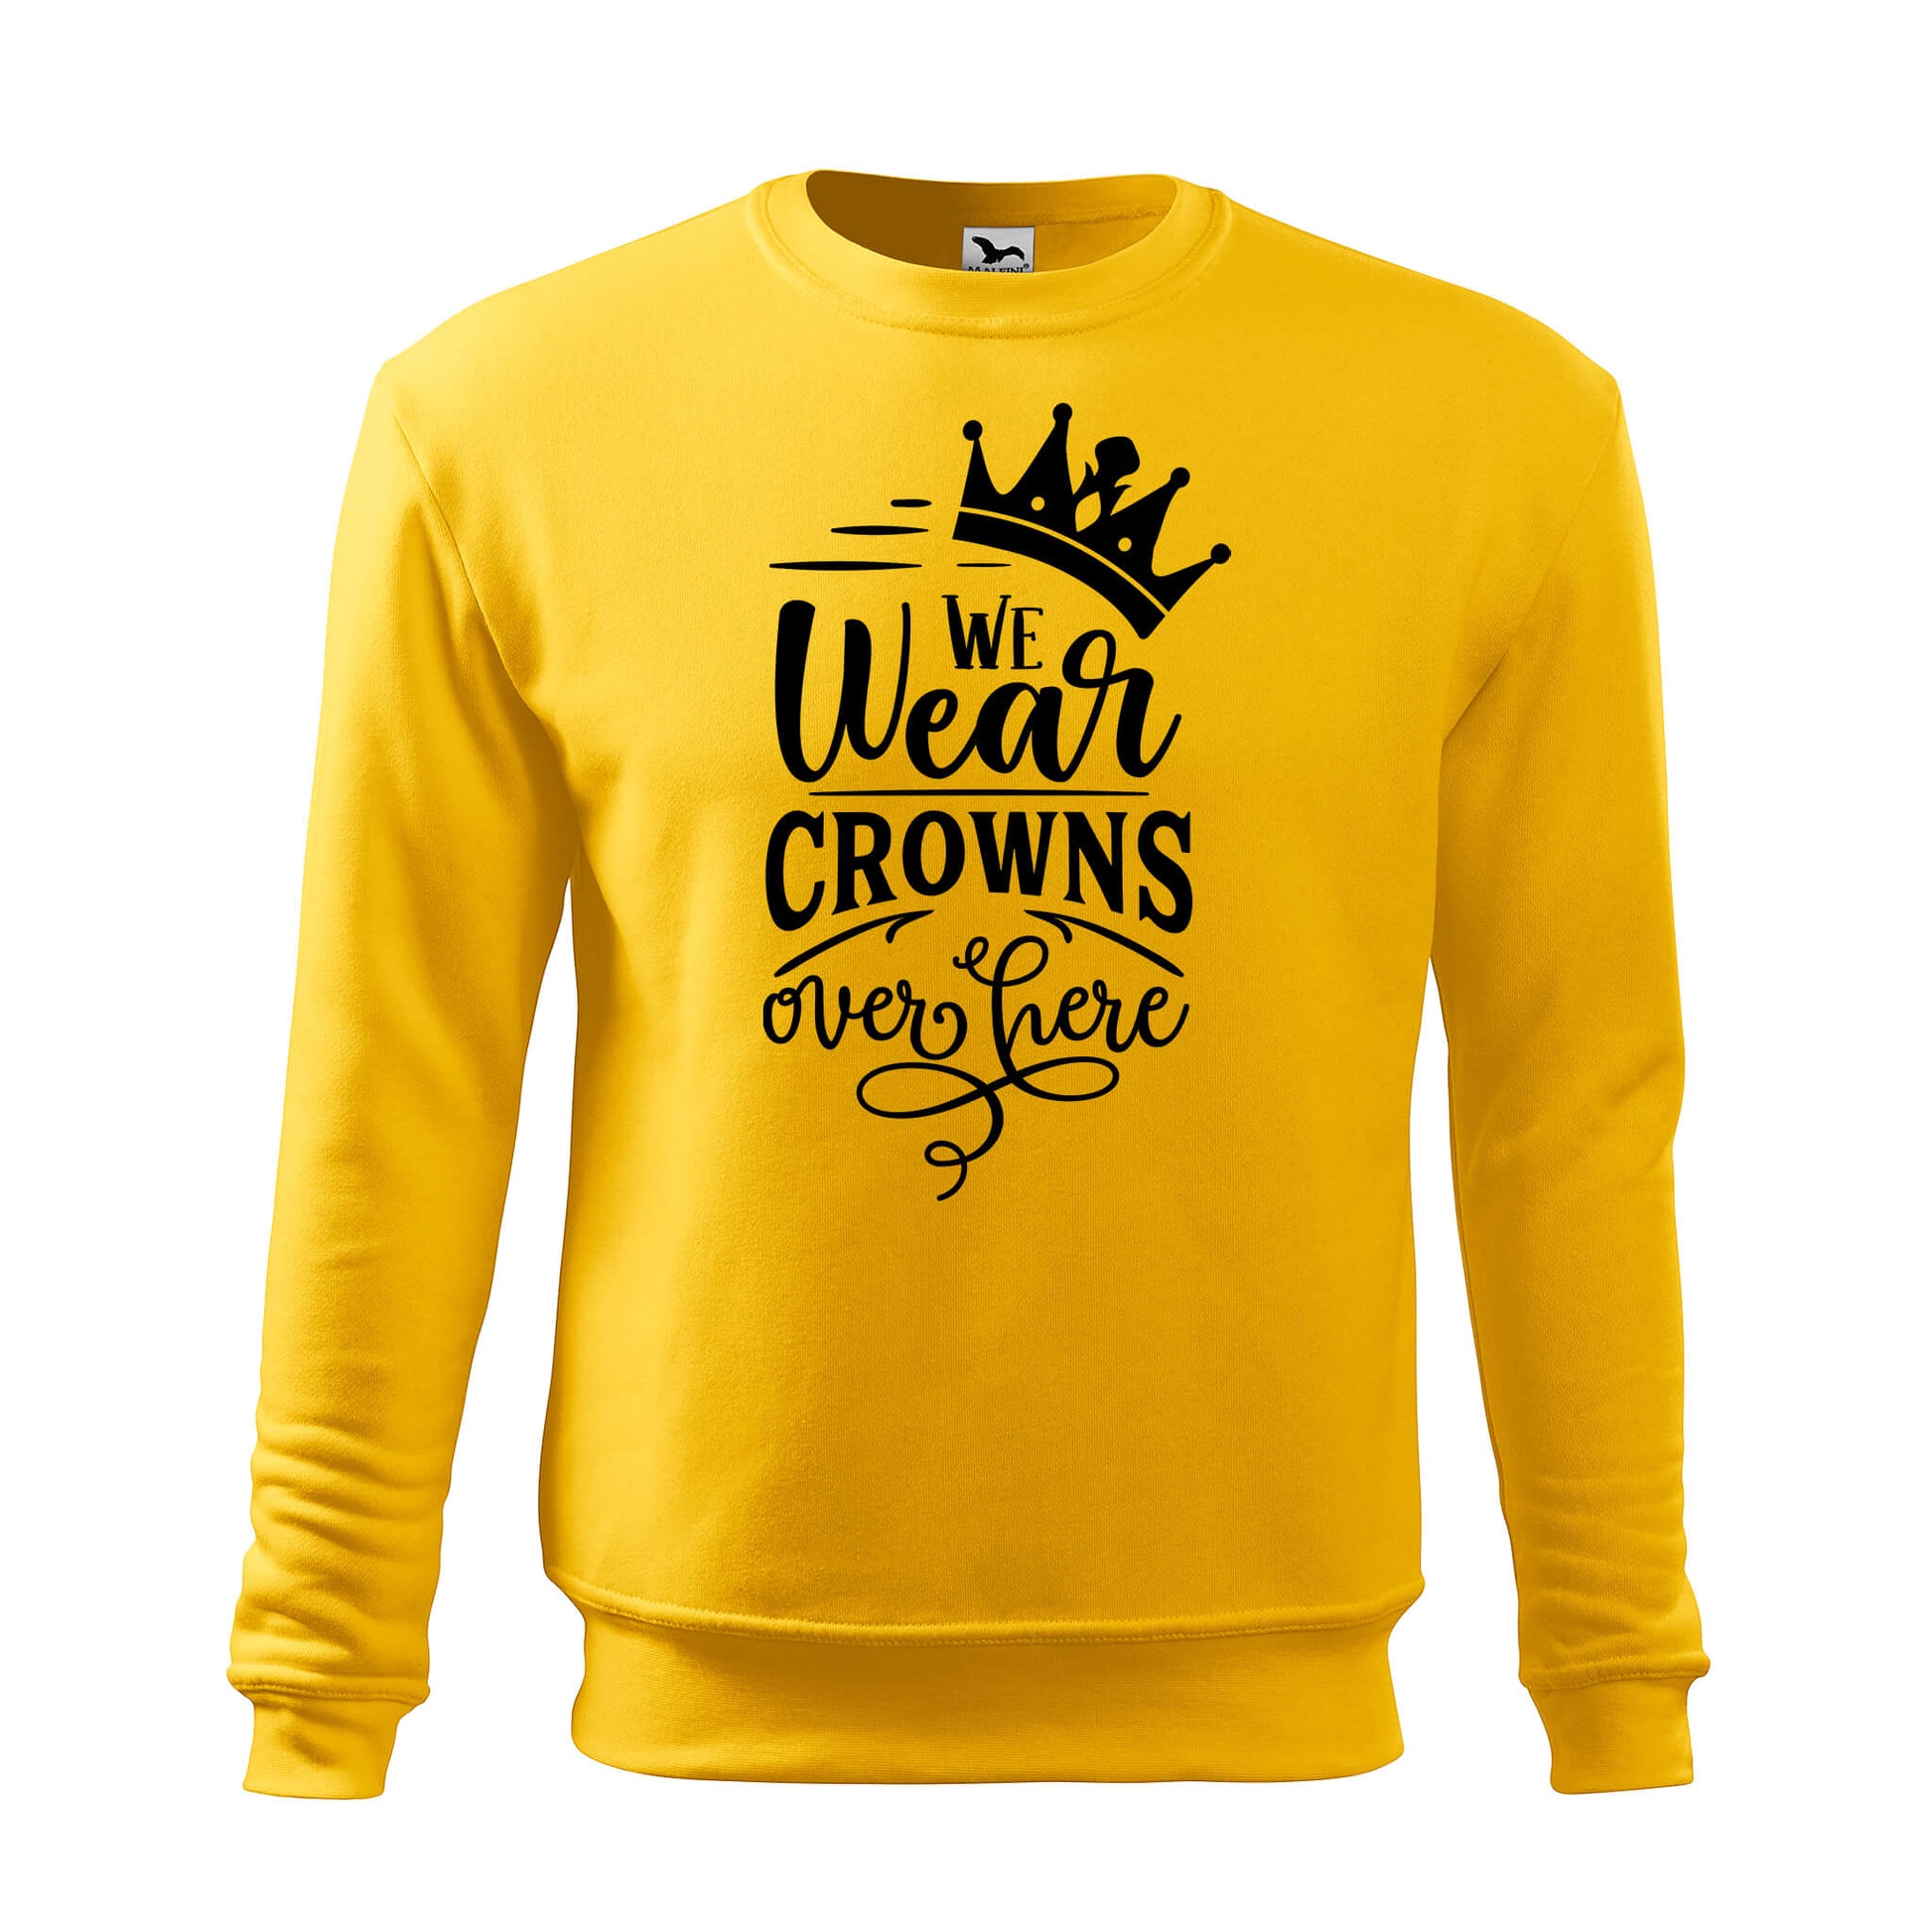 We wear crowns sweatshirt - rvdesignprint